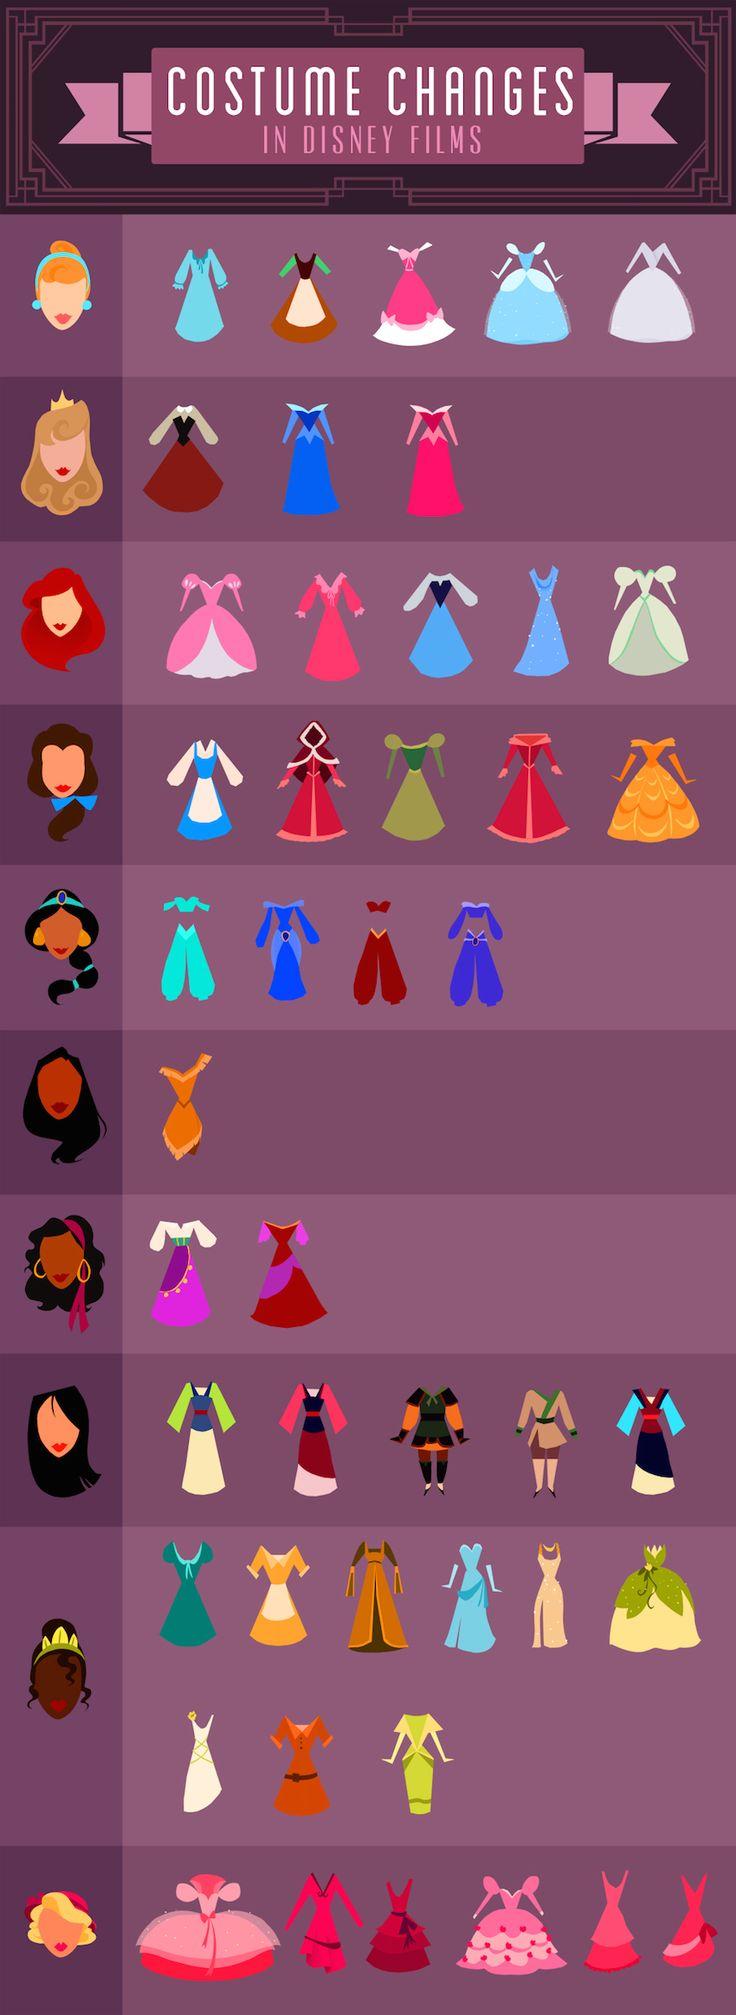 Wedding - Disney Costume Changes